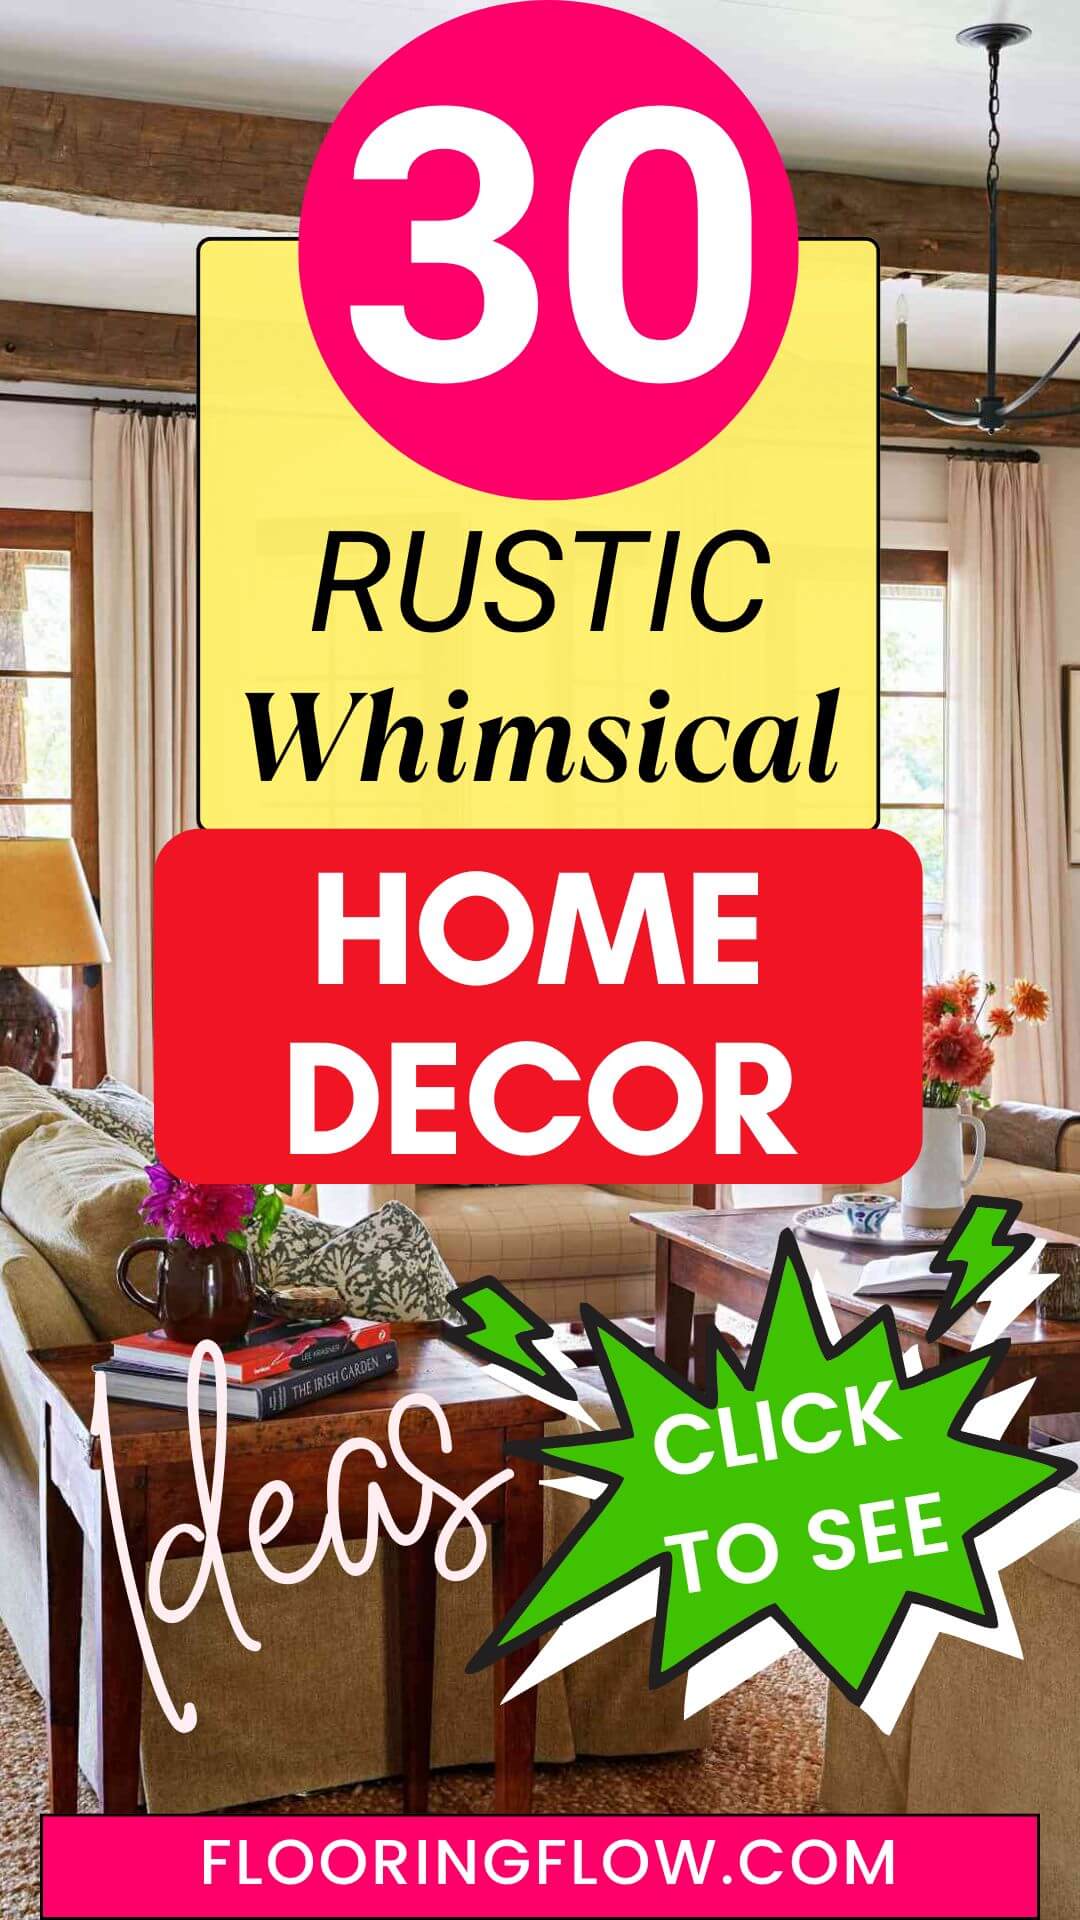 Rustic Whimsical Home Decor Ideas